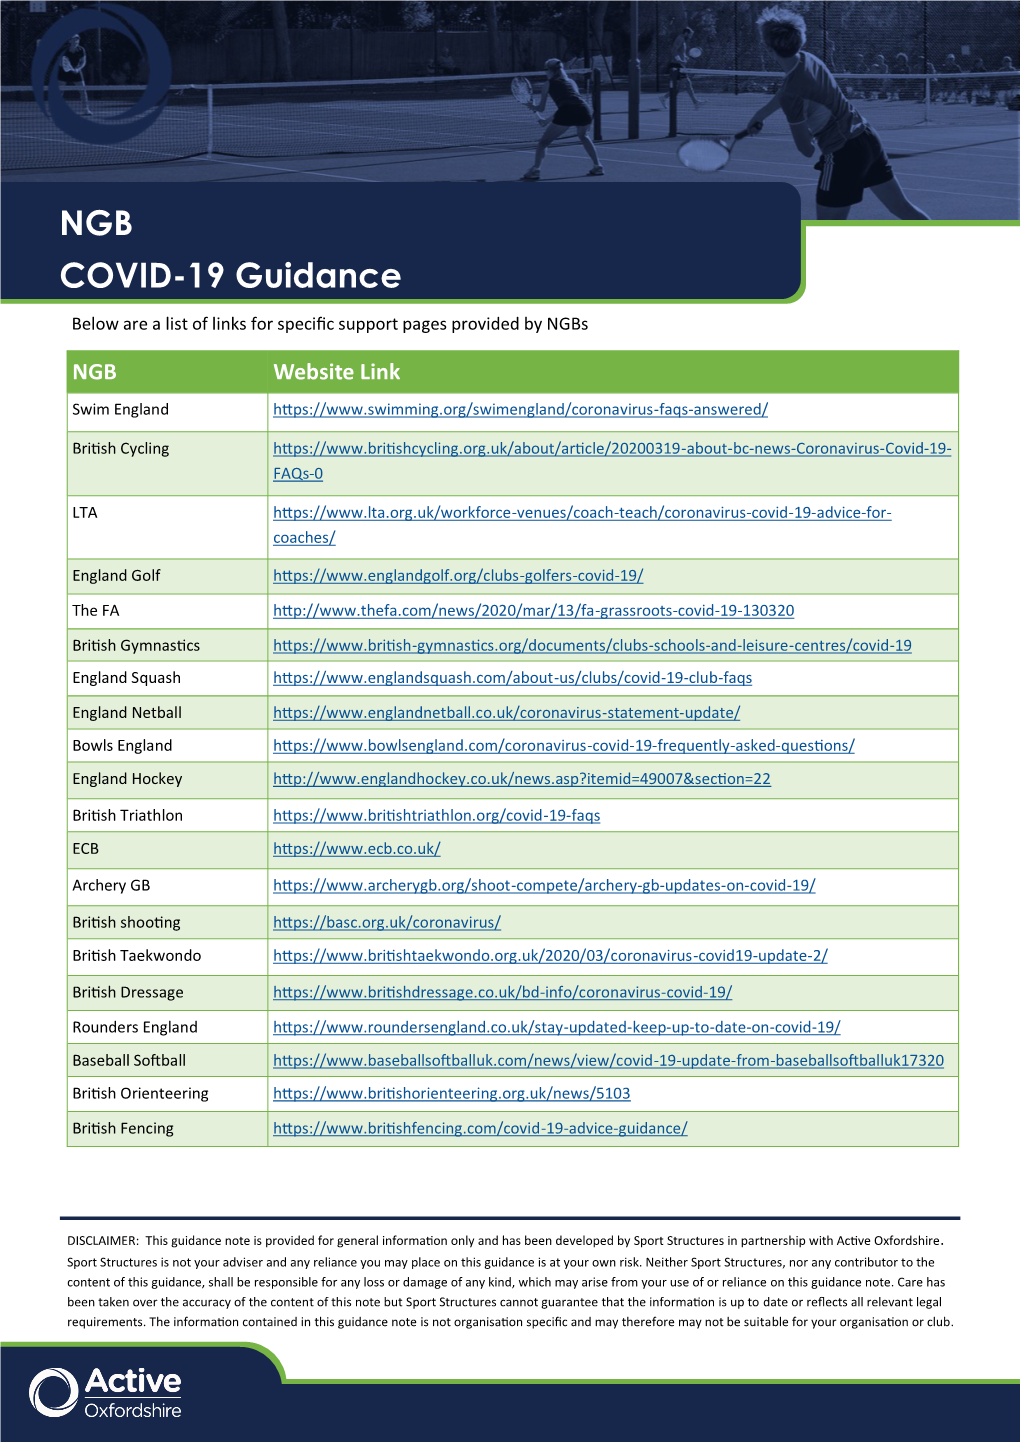 NGB COVID-19 Guidance